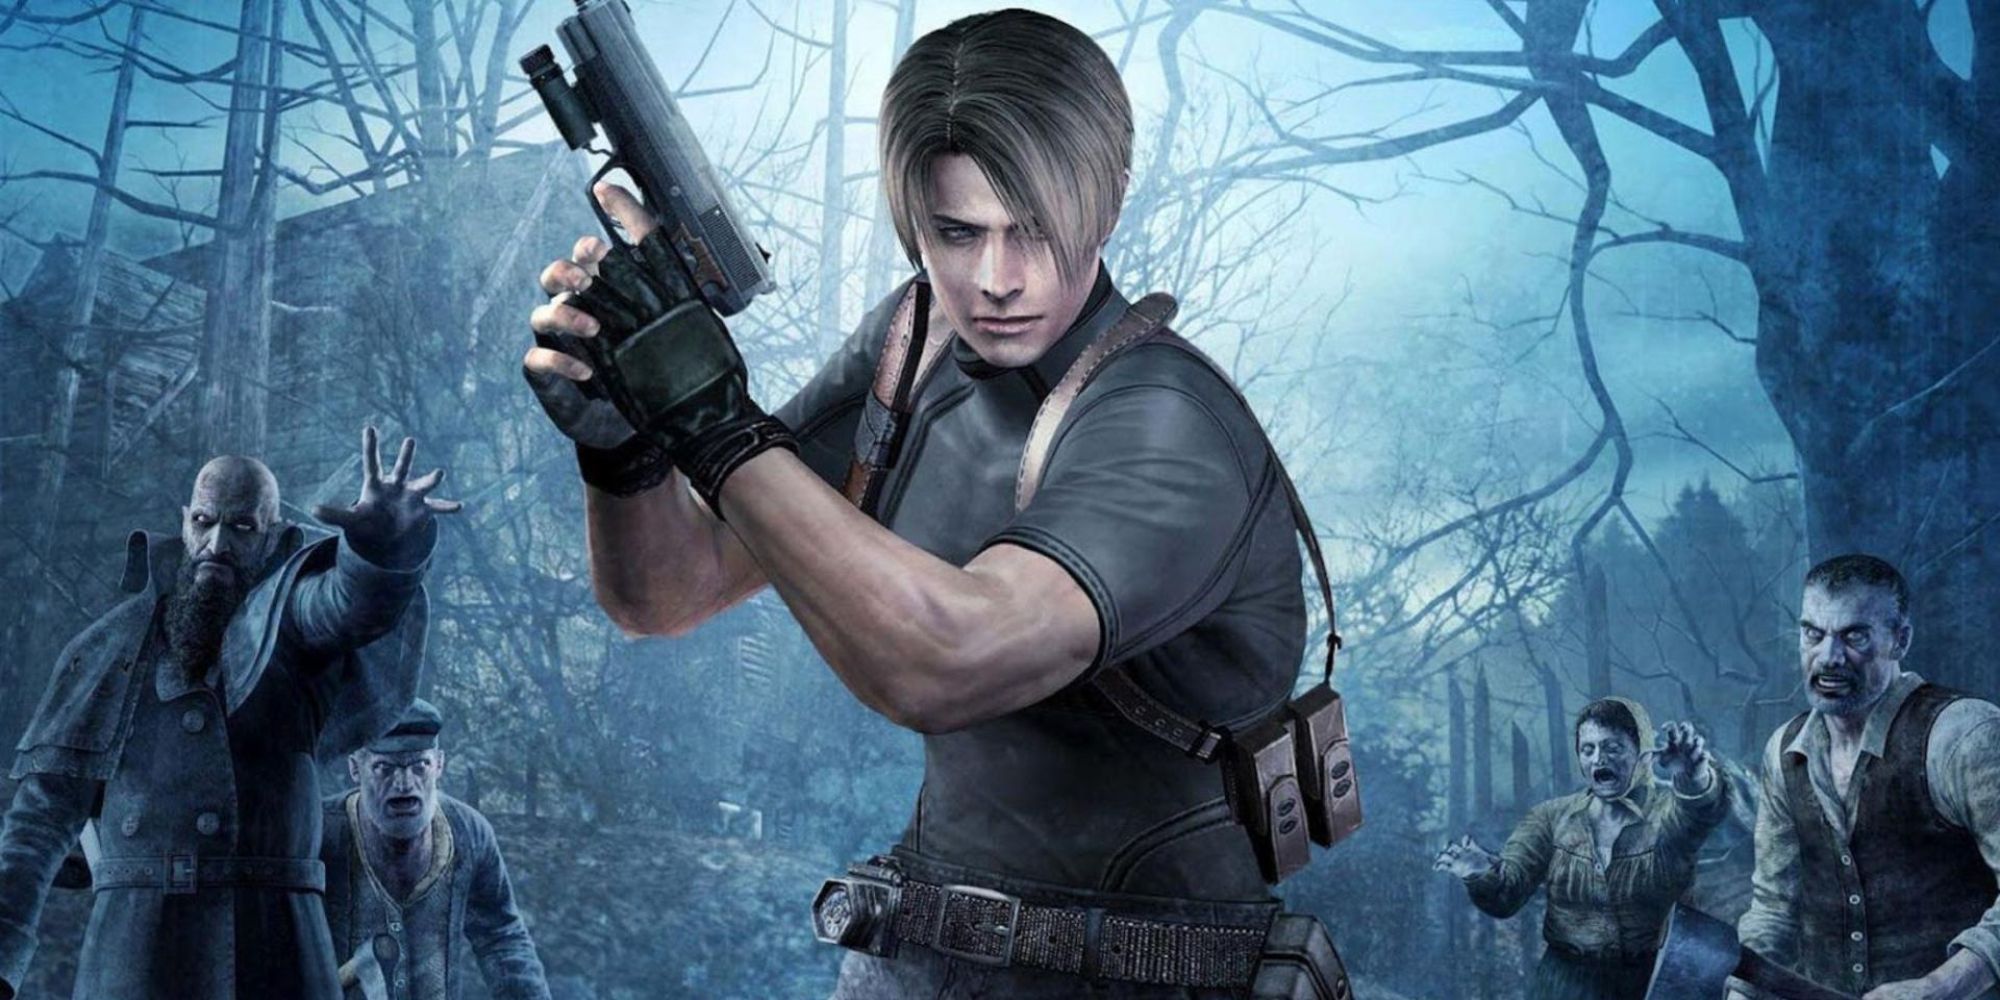 Leon Kennedy from Resident Evil 4